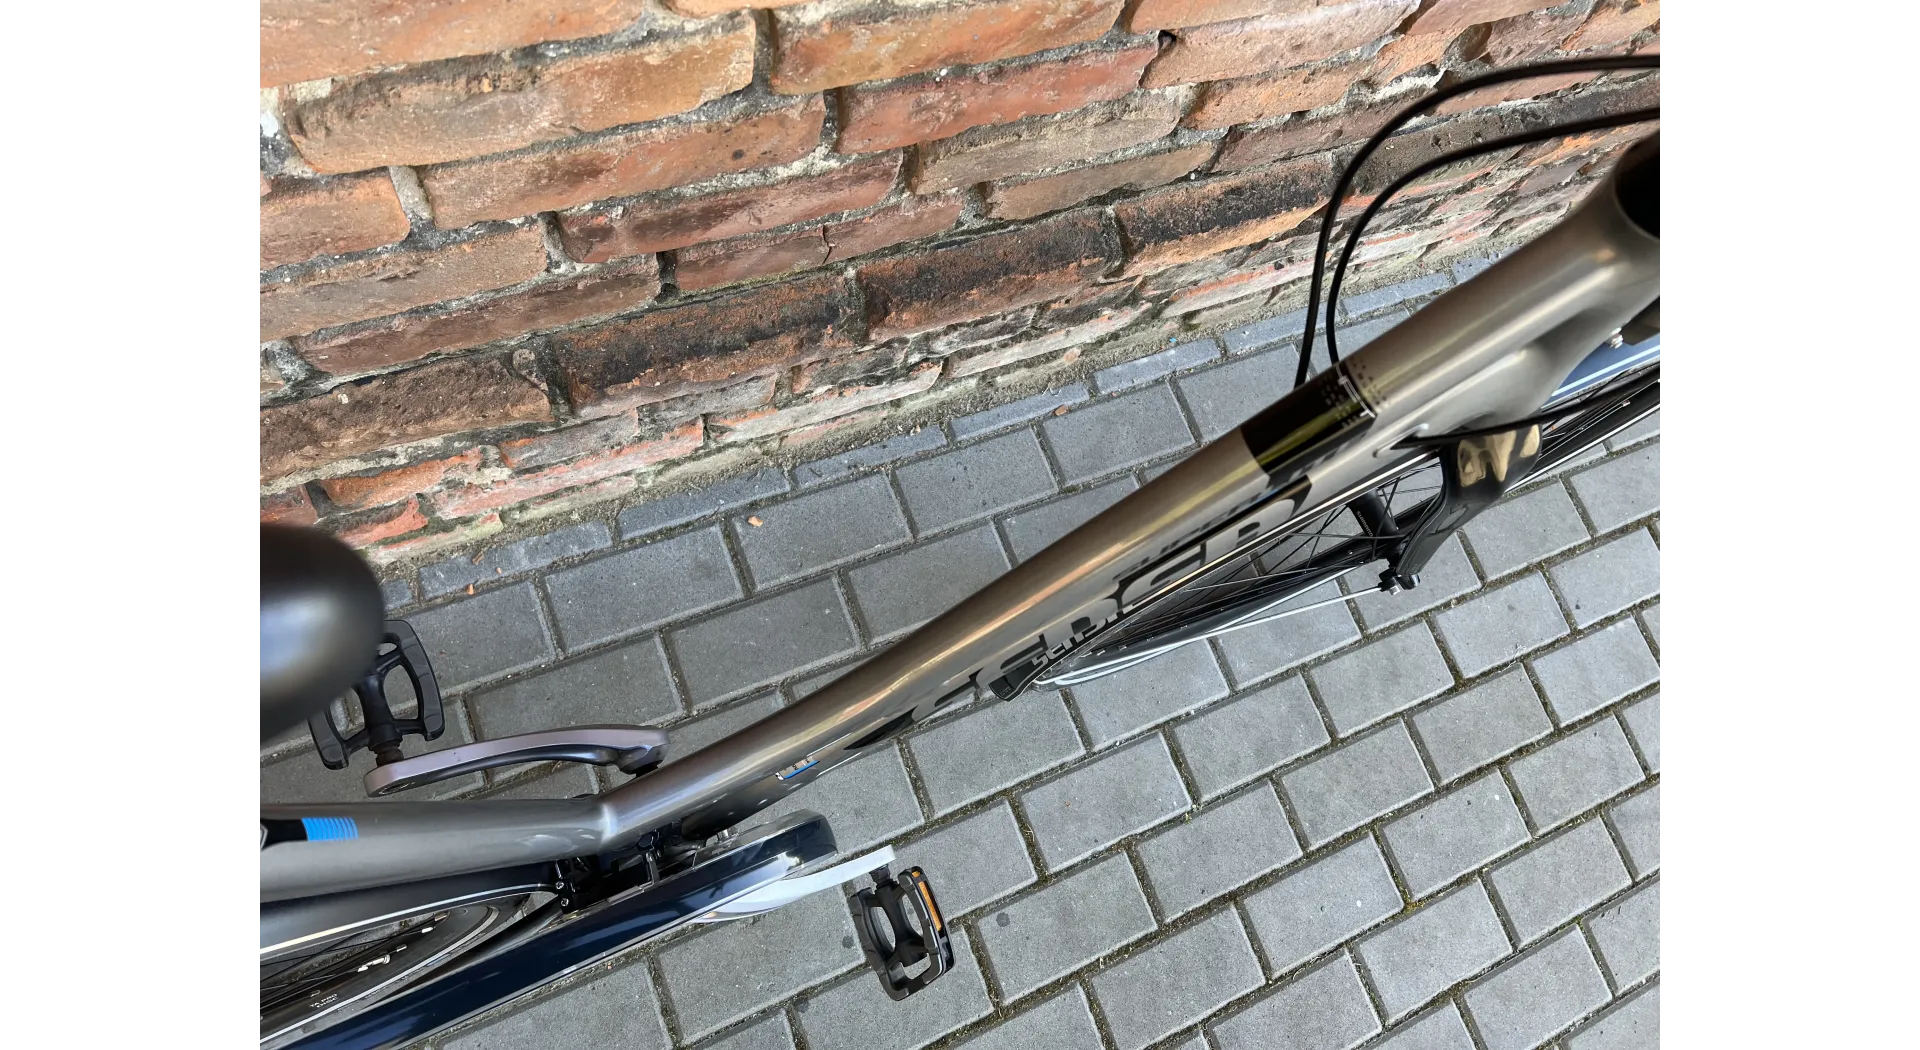 Sensa Superlite 28'', Deore XT 3x9, rower holenderski